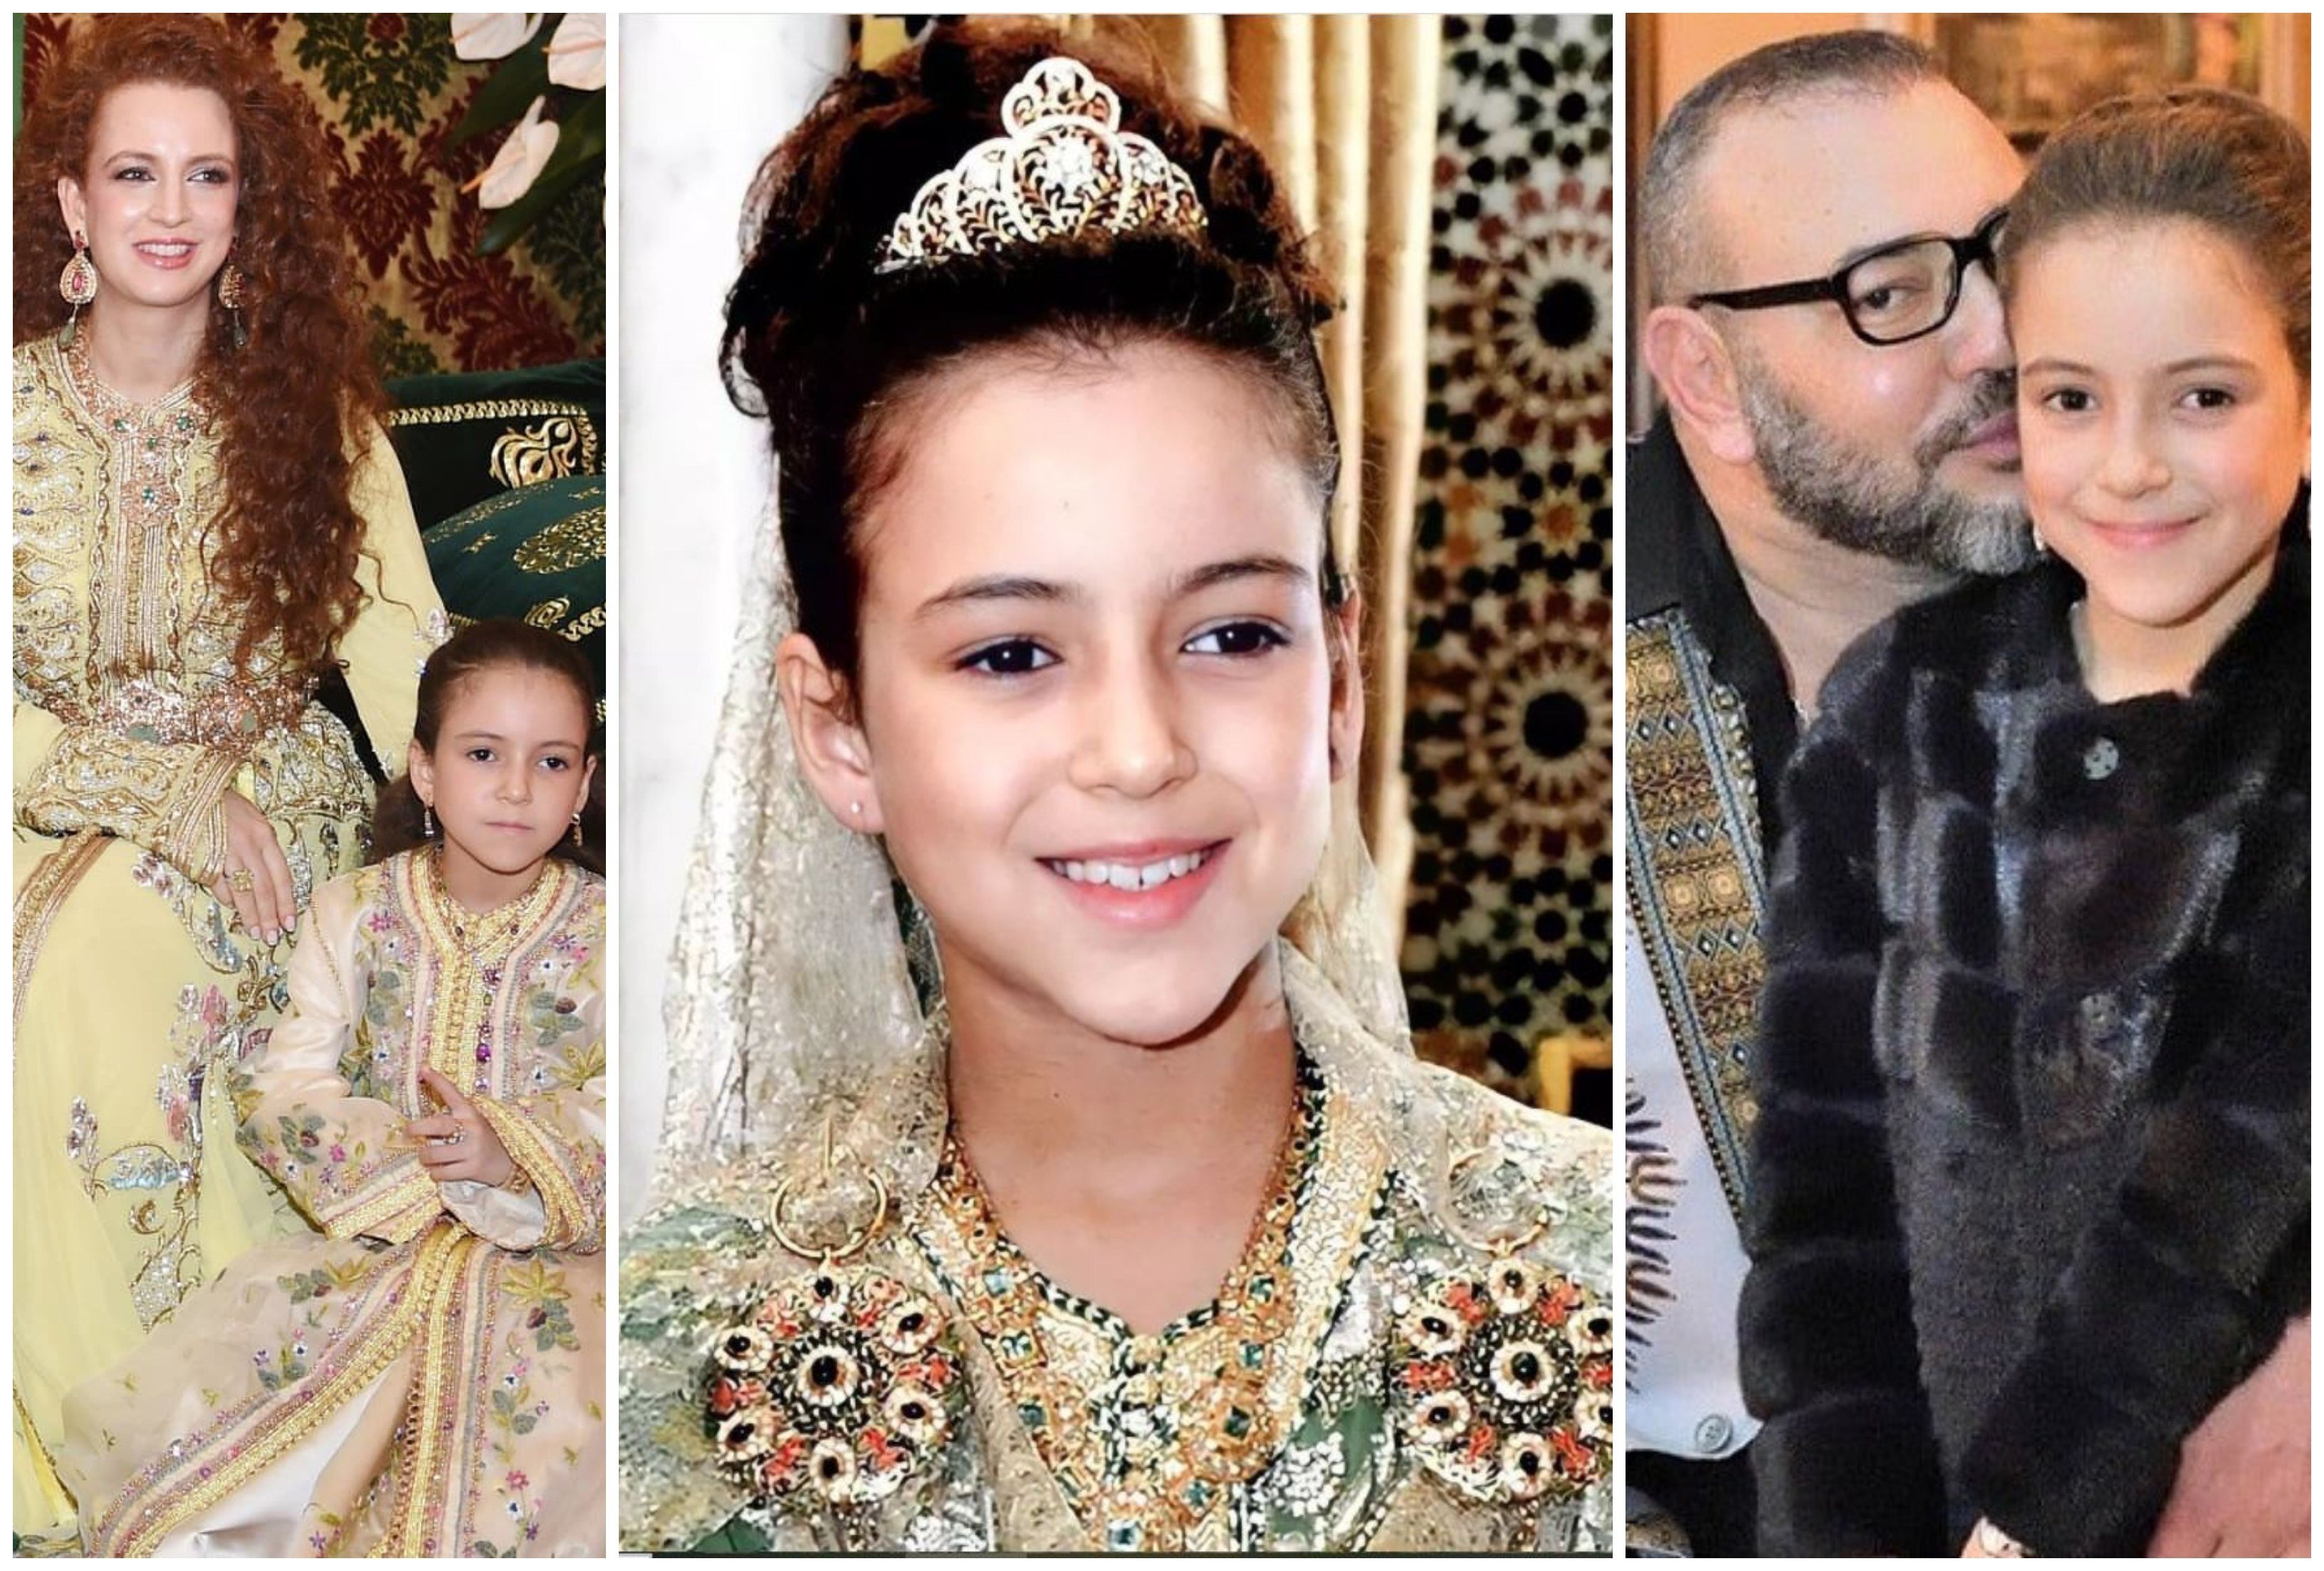 Morocco’s beloved Princess Lalla Khadija. Photos: @princesse_lalla_khadija/Instagram